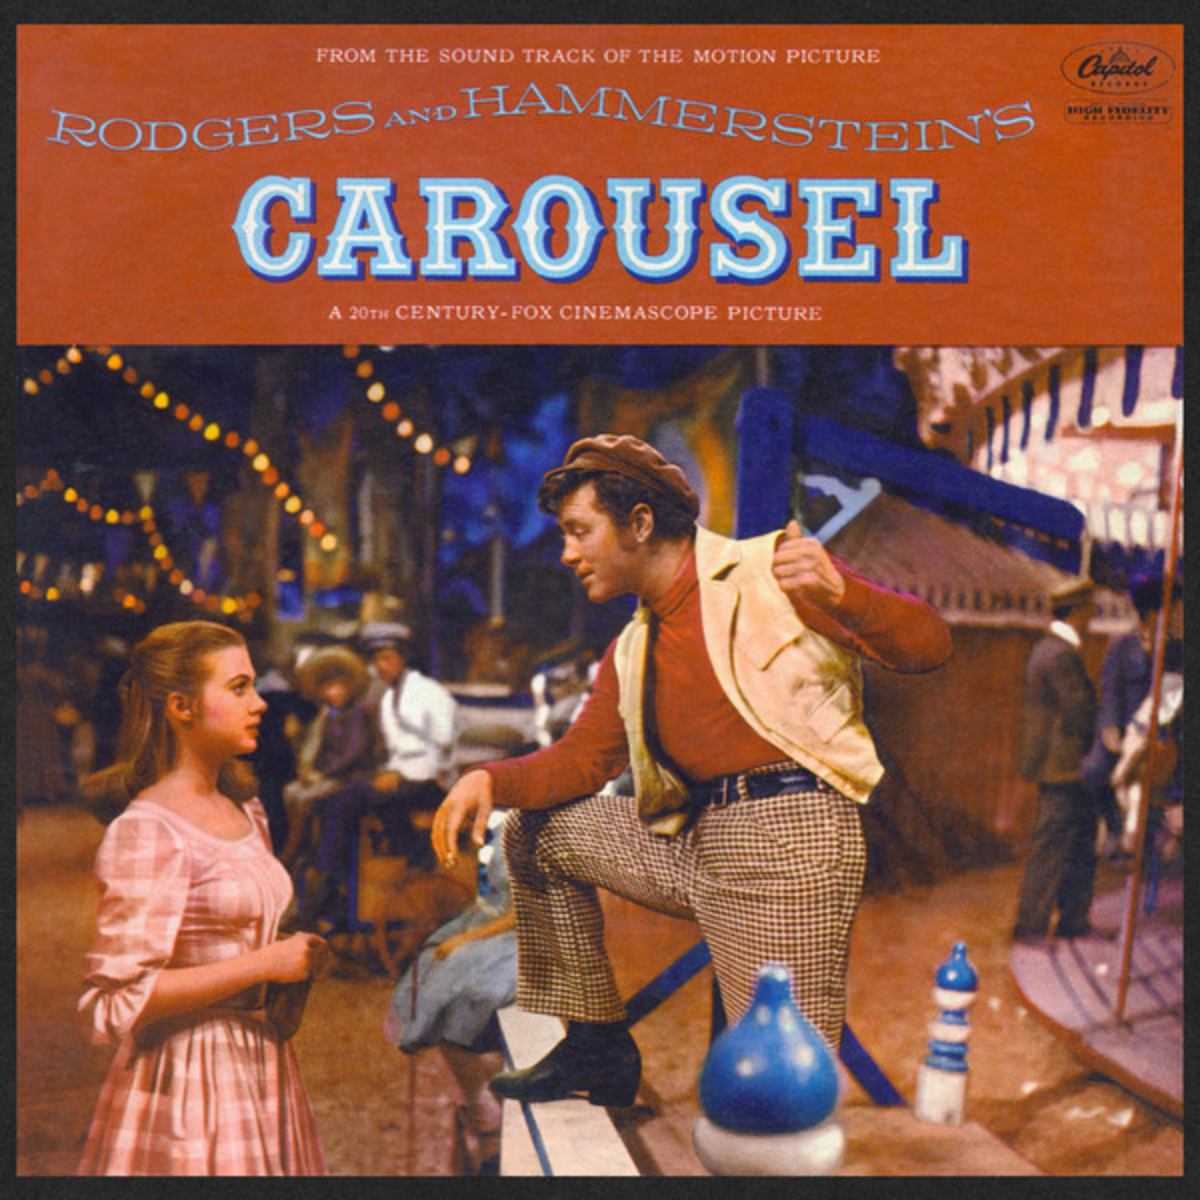 Carrossel (capa do álbum)